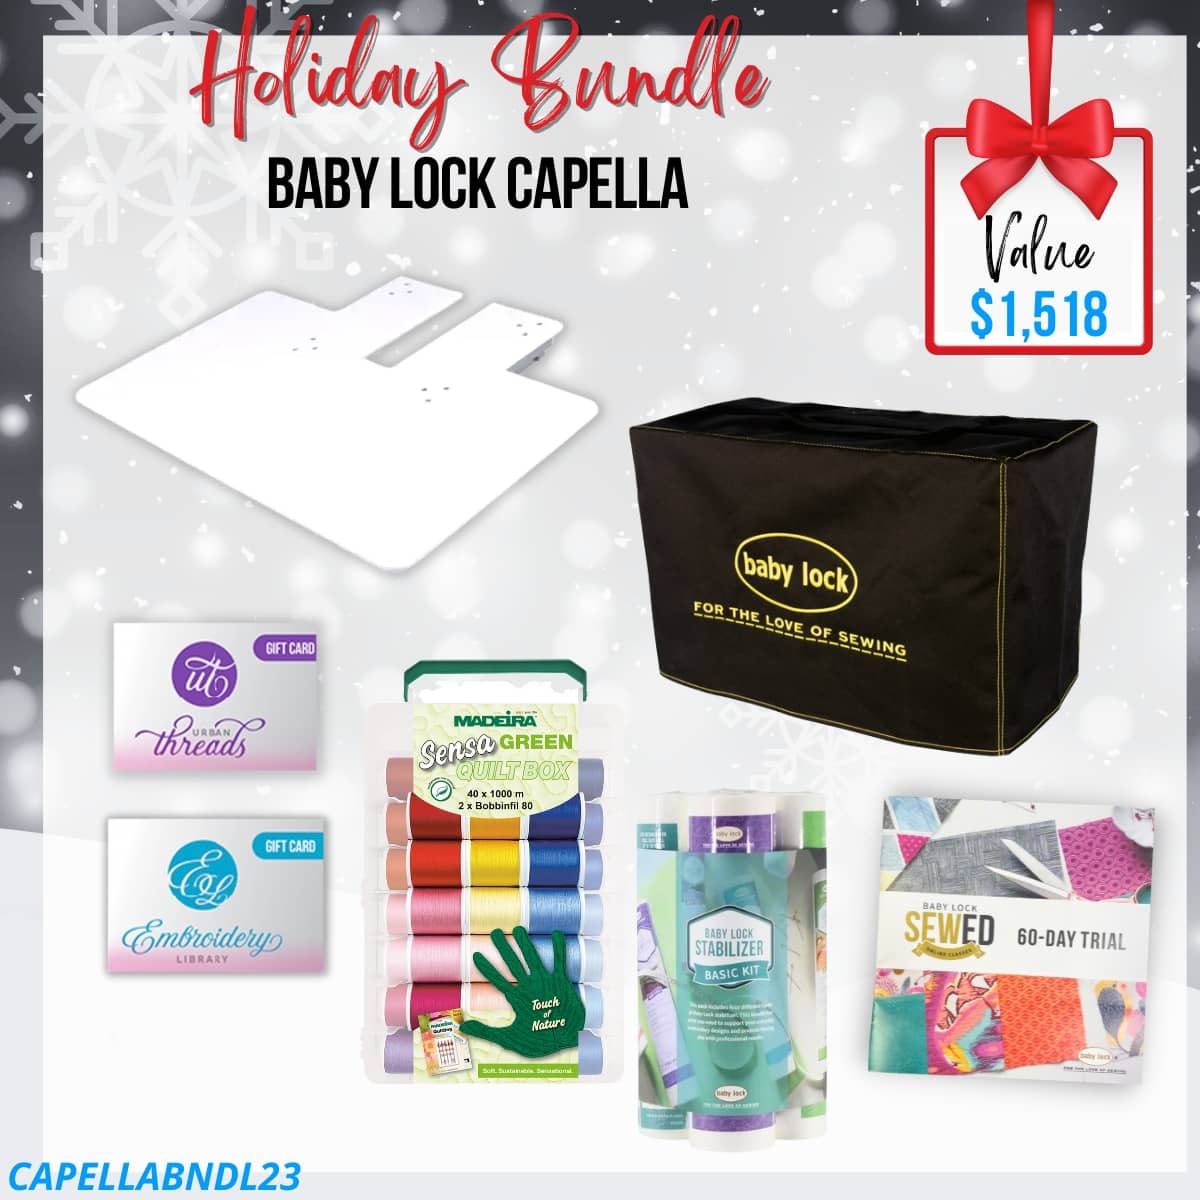 Baby Lock Capella bundle image for holiday sale